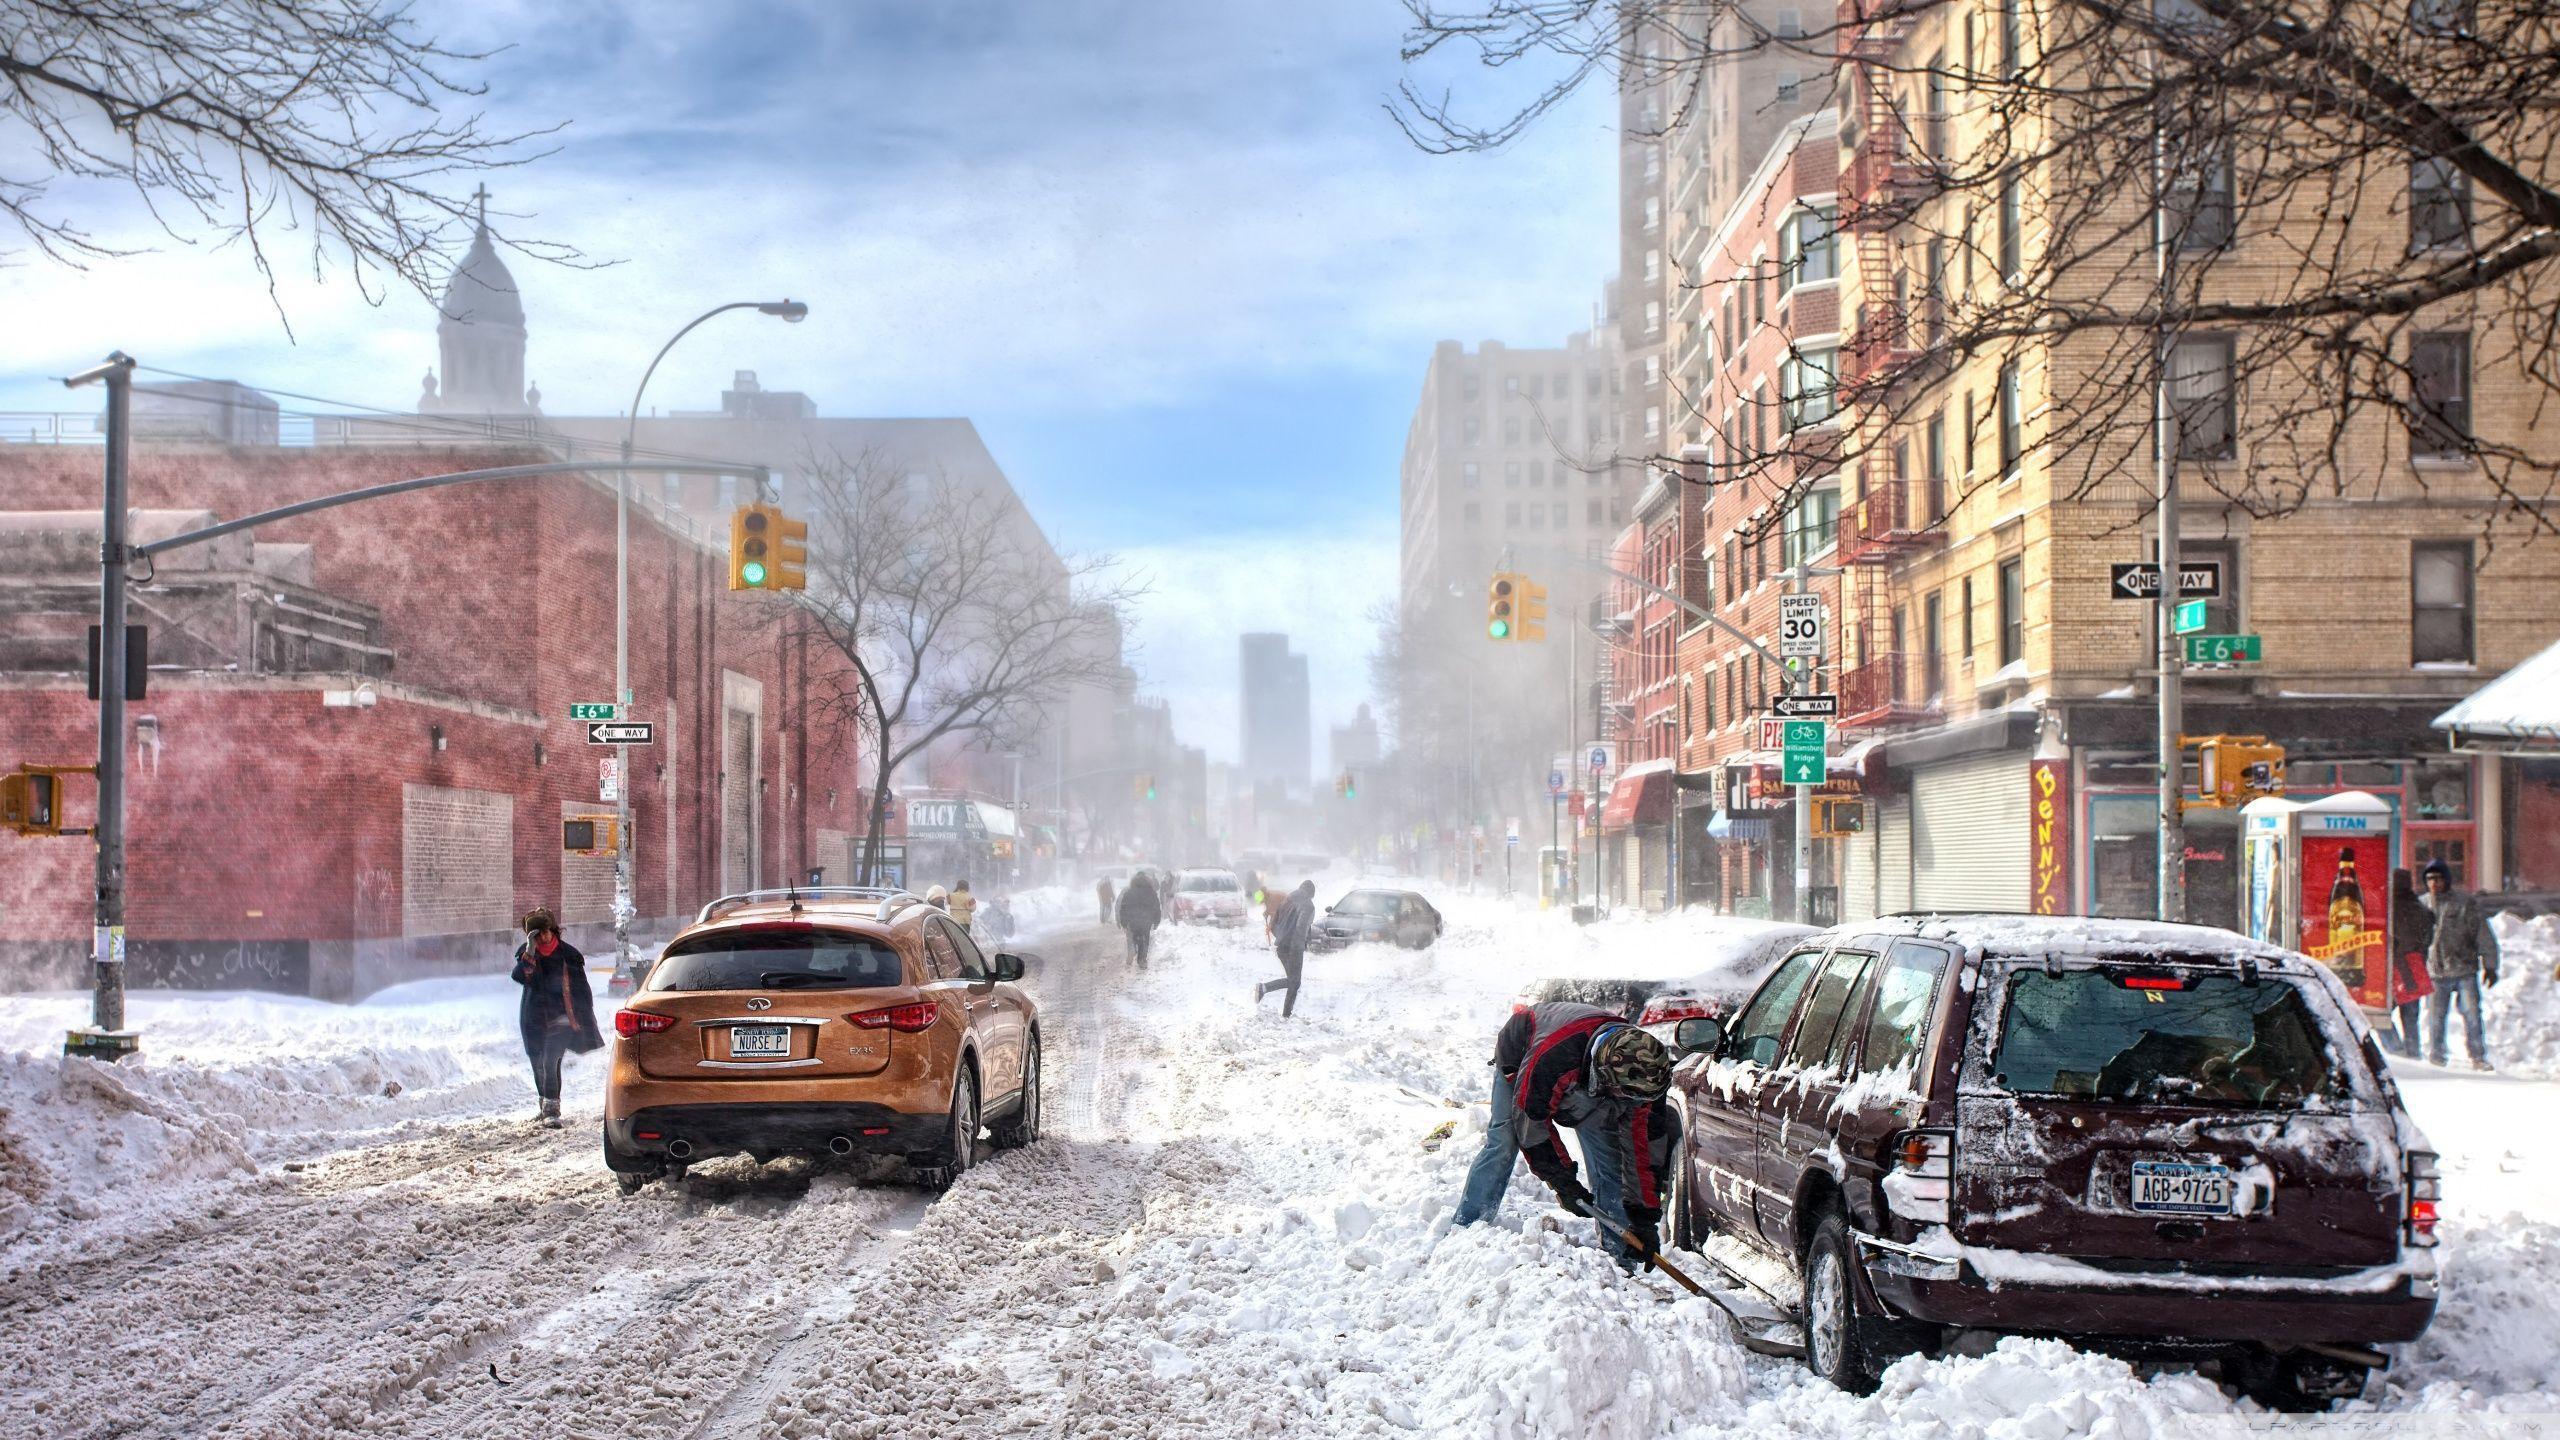 Winter In The City HD desktop wallpaper, High Definition